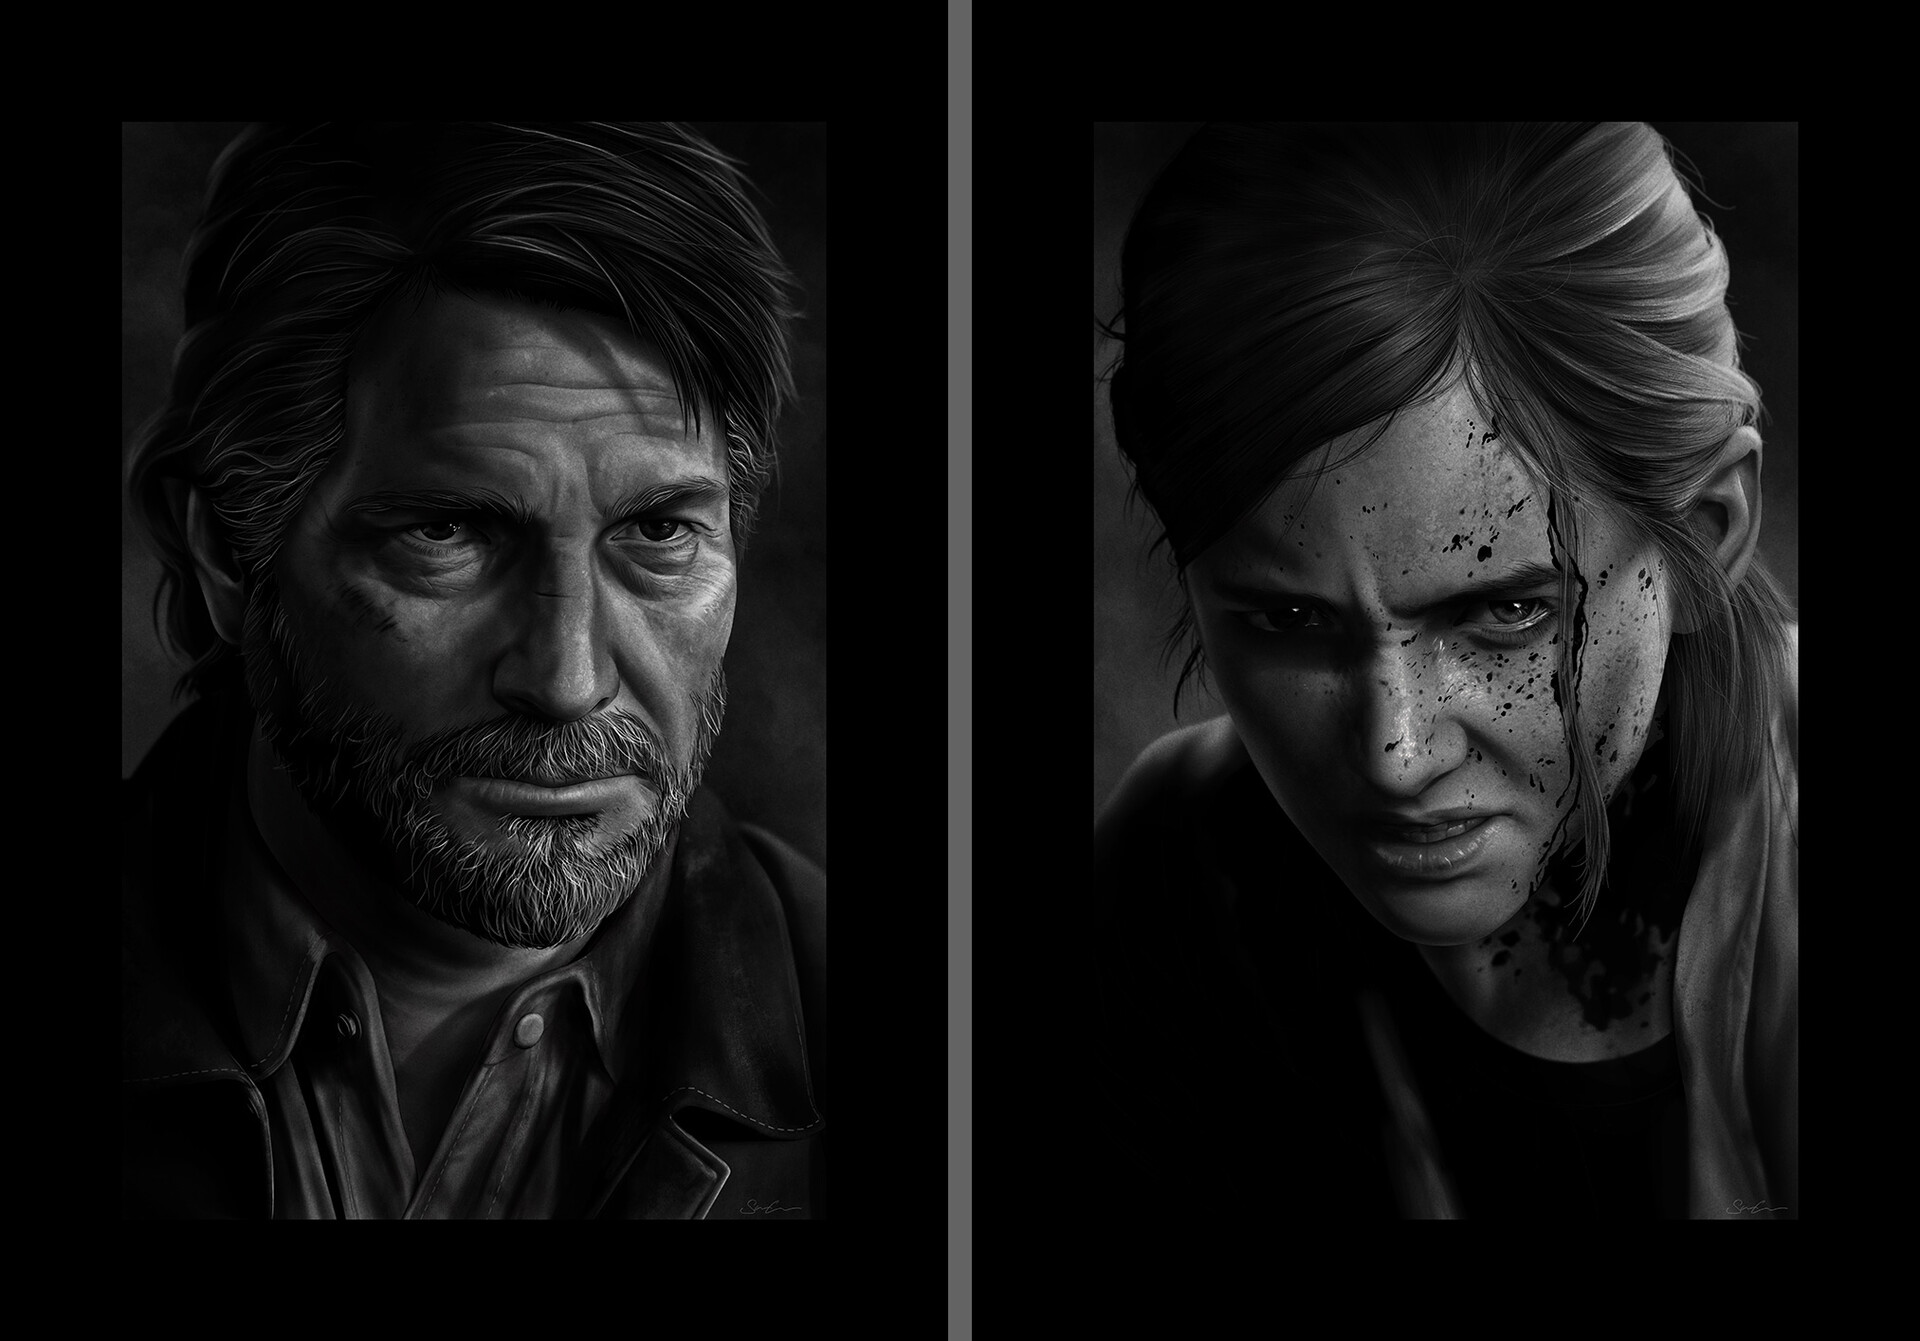 ArtStation - The Last of Us Part.2 Ellie